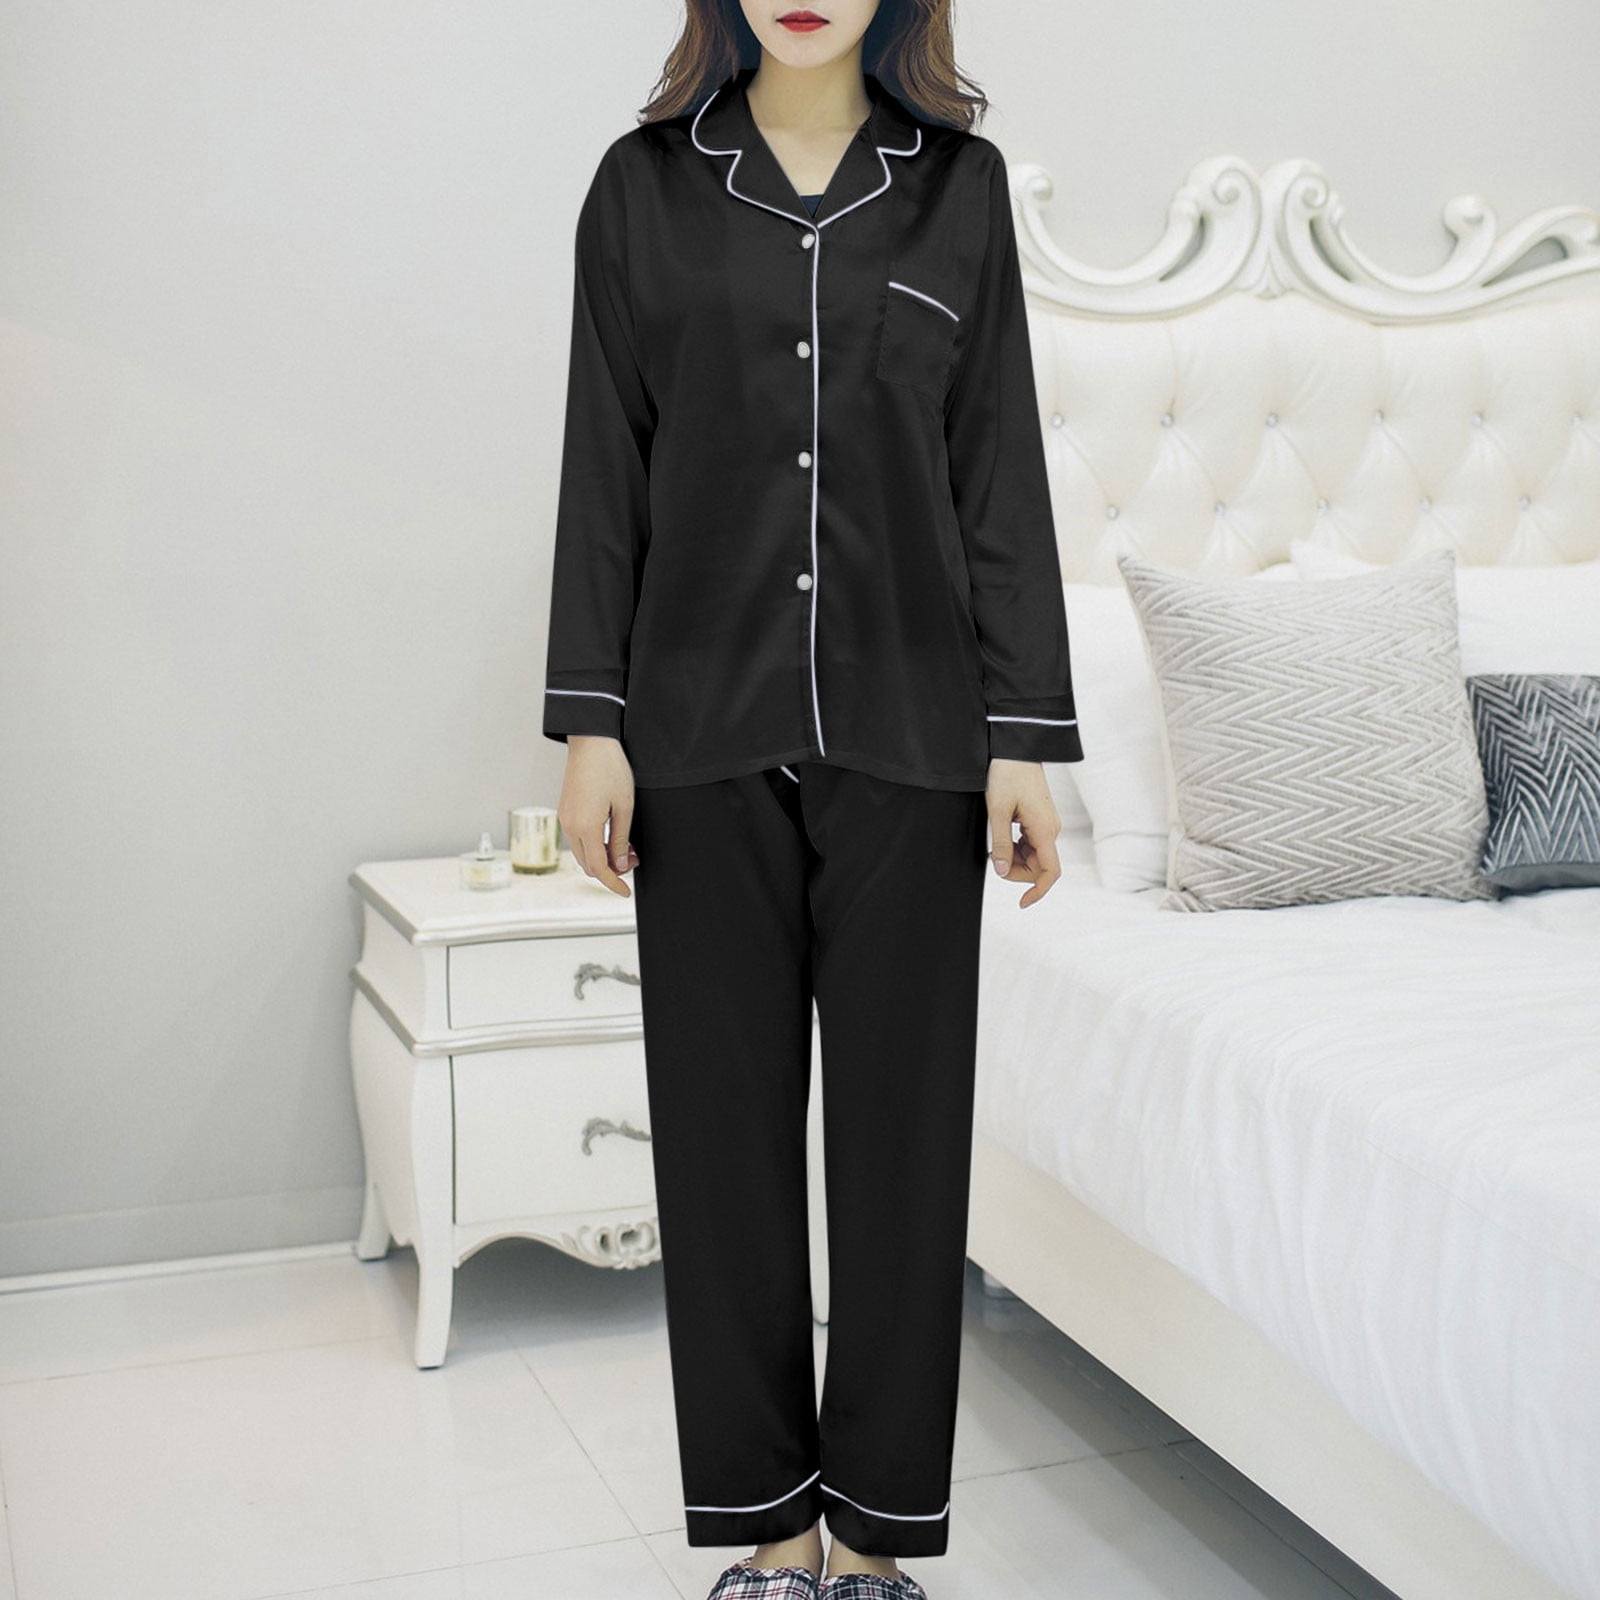 ZyeKqe Pajamas Sets for Women Long Sleeve Lapel Button down